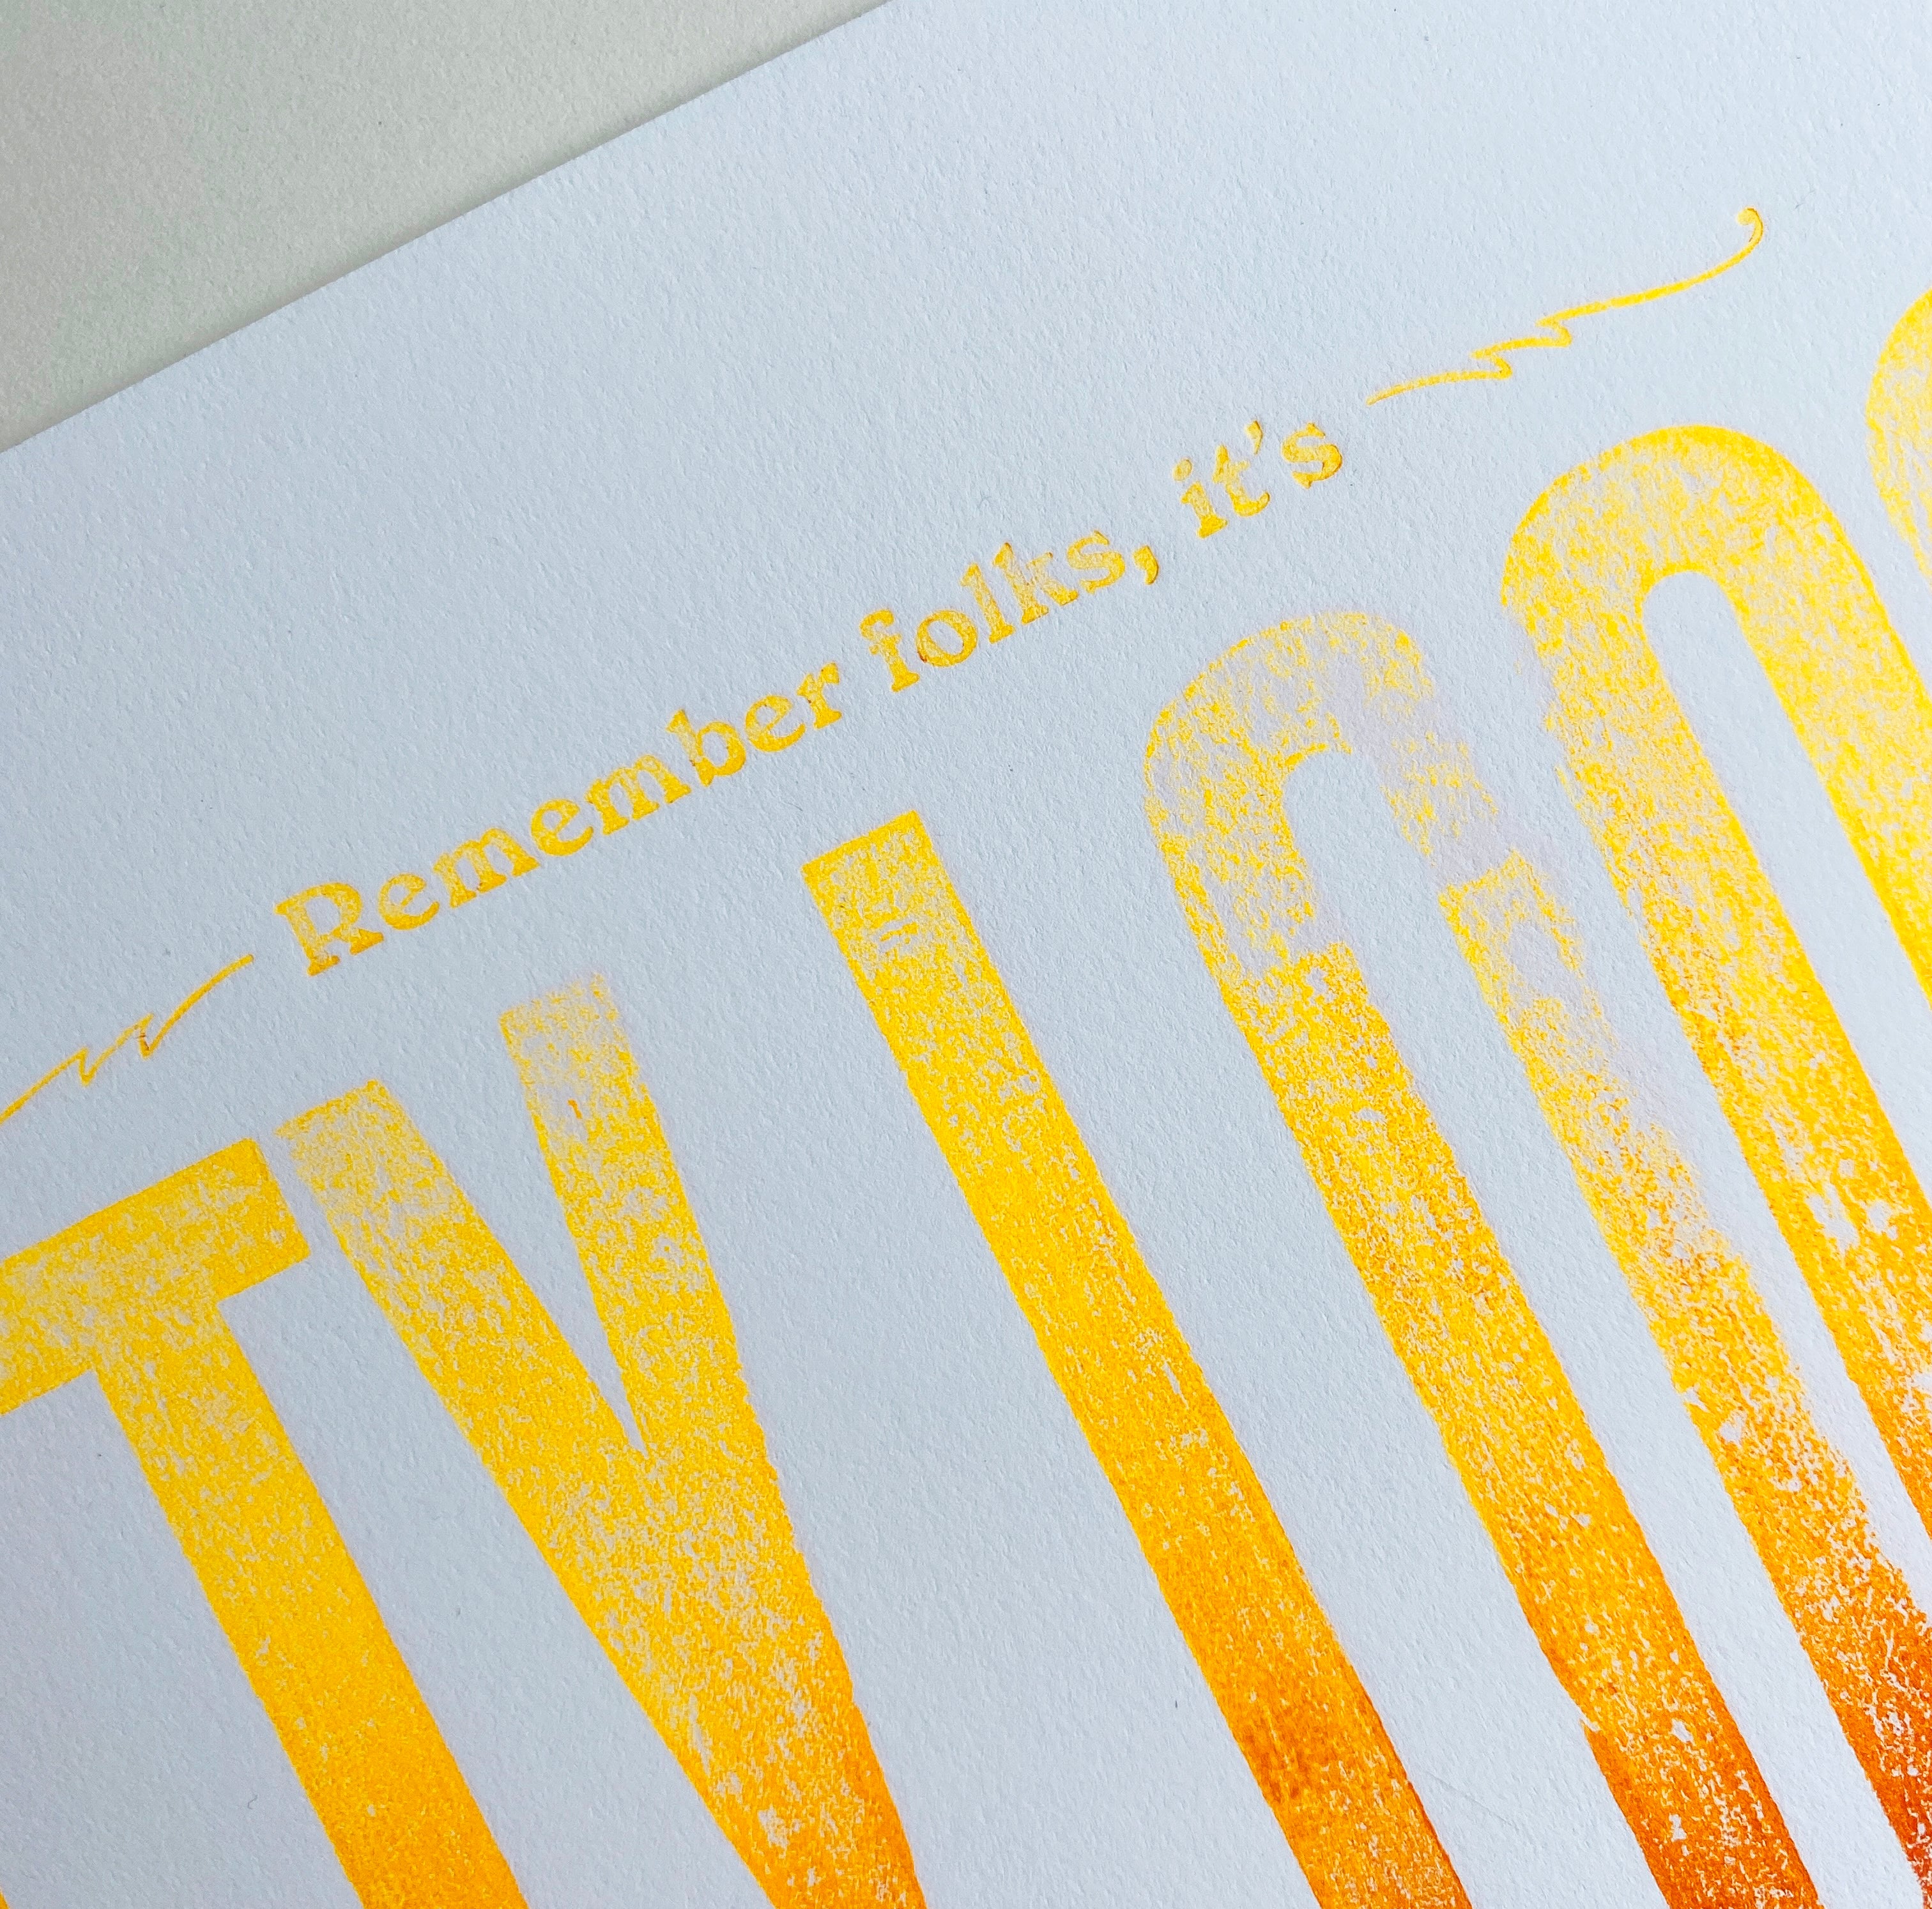 Close-up of 'Remember folks, it's' text on letterpress art print